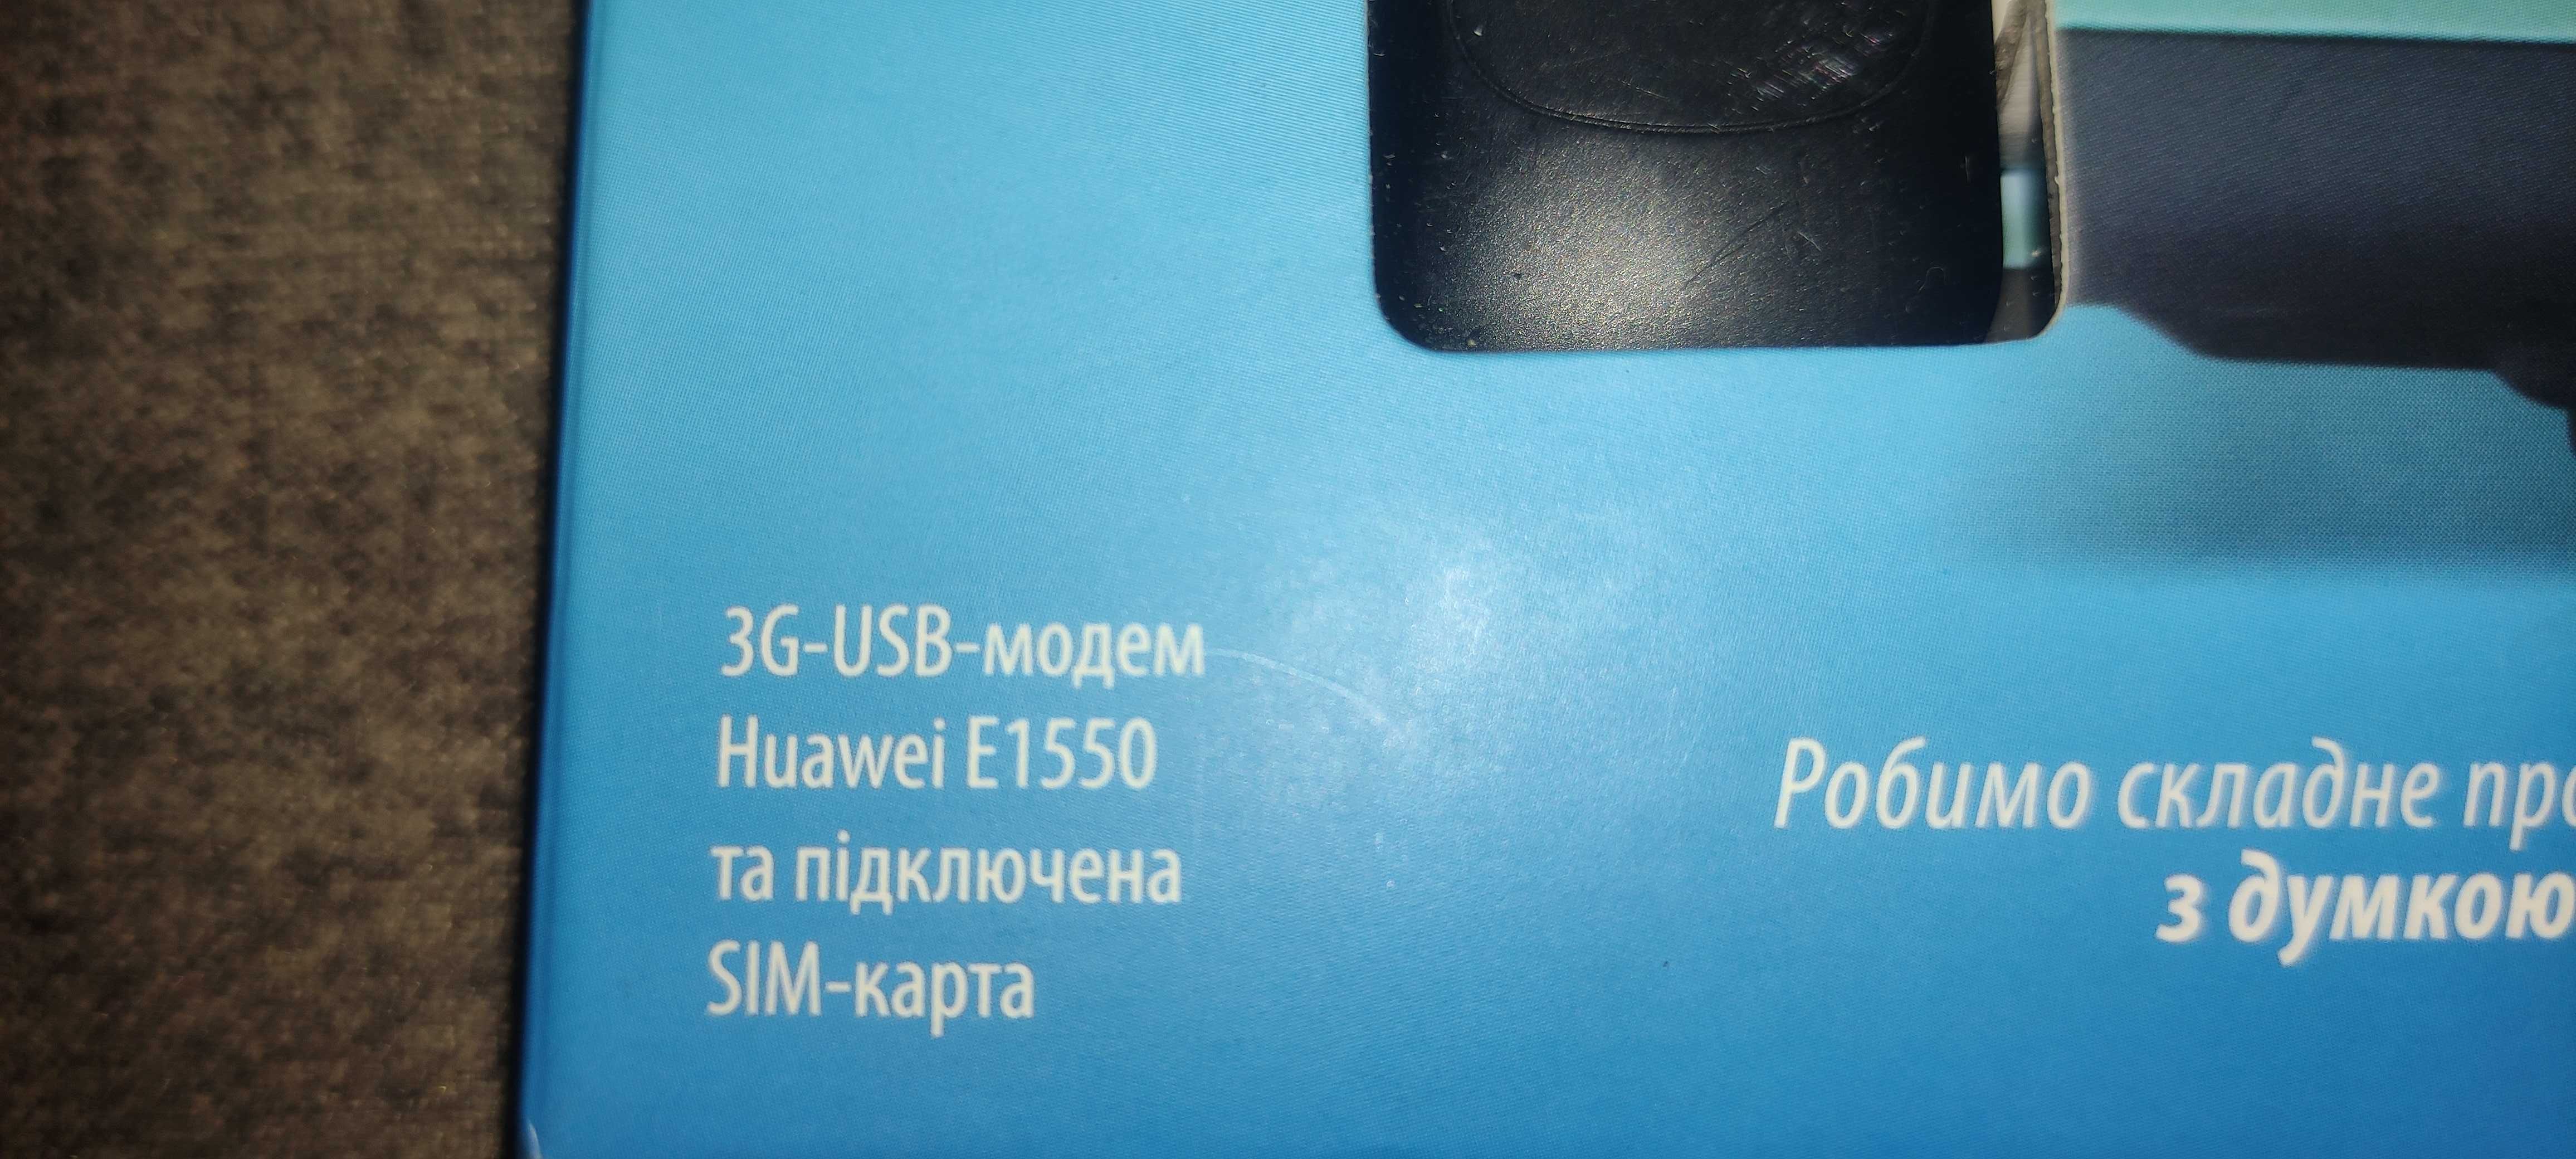 Модем Huawei  e1550